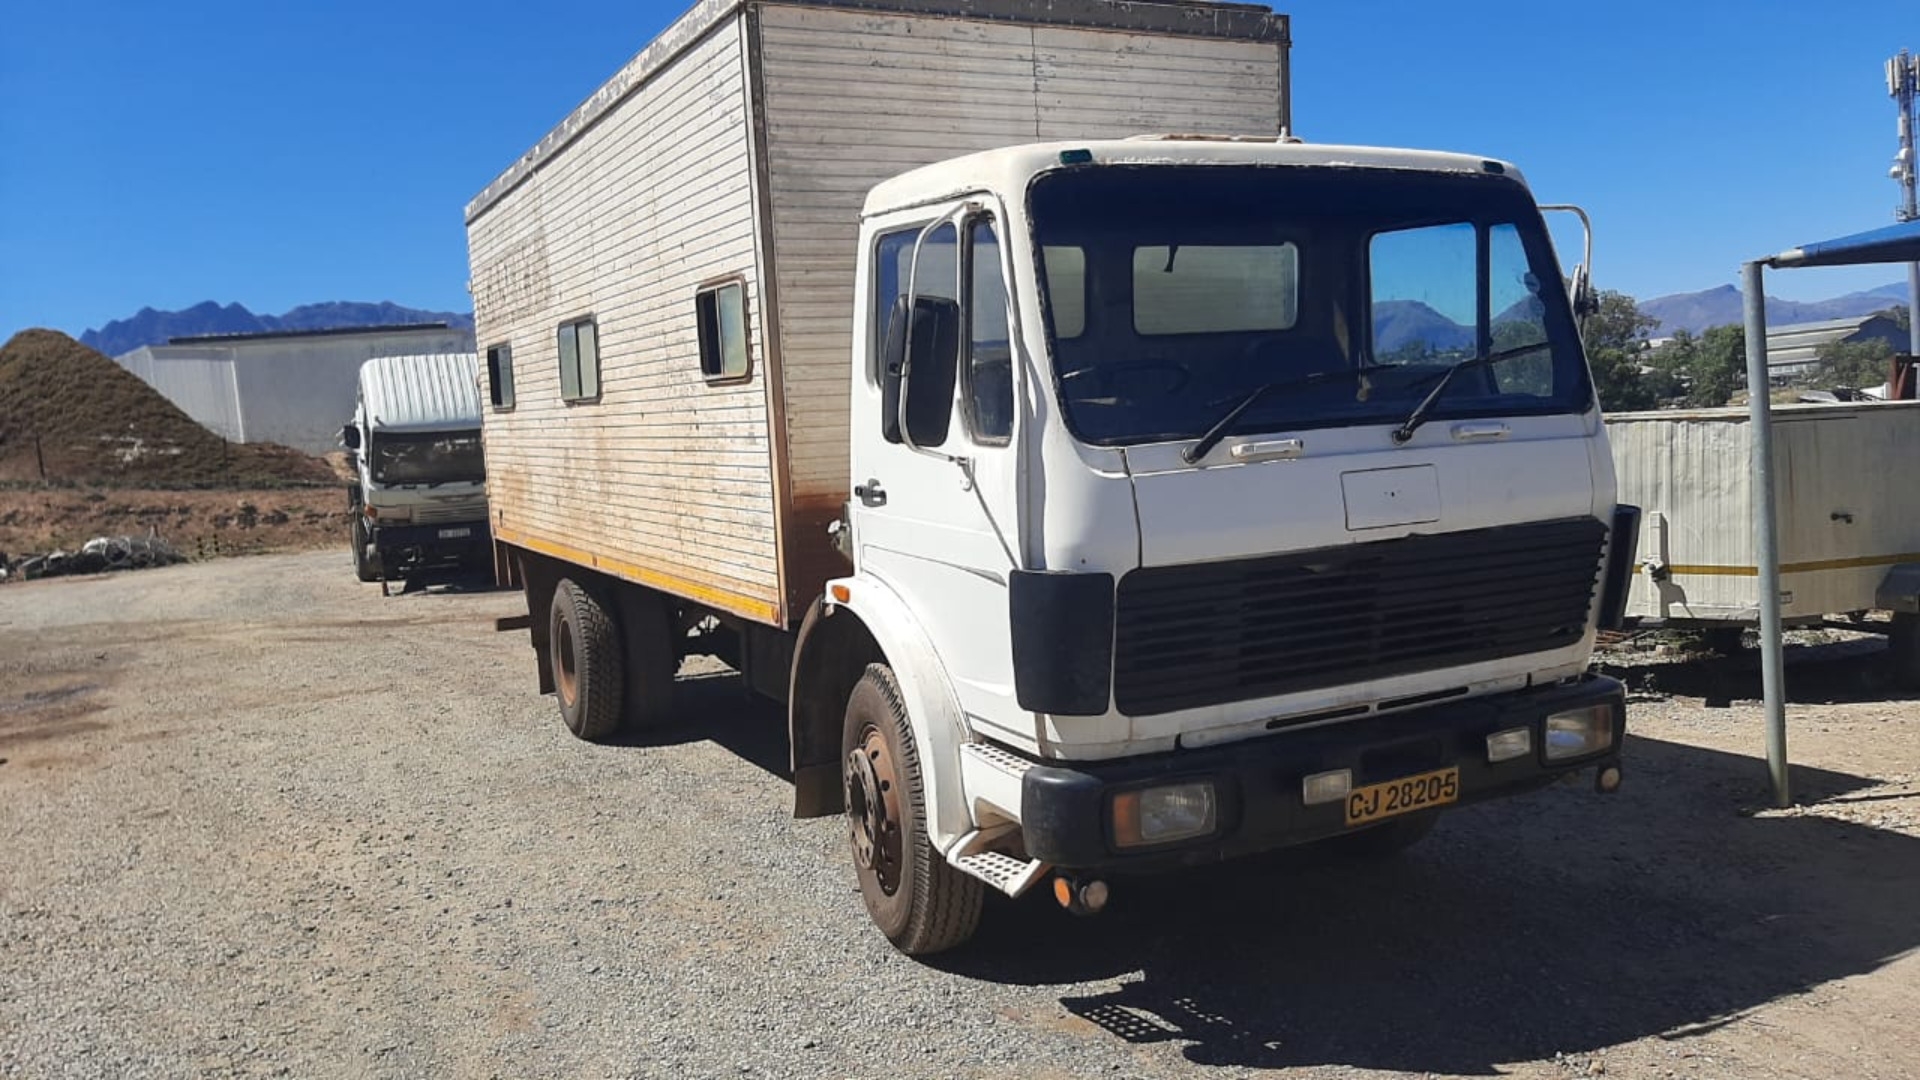 1983 Mercedes Benz 14 13 Truck Trucks for sale in Western Cape | R ...